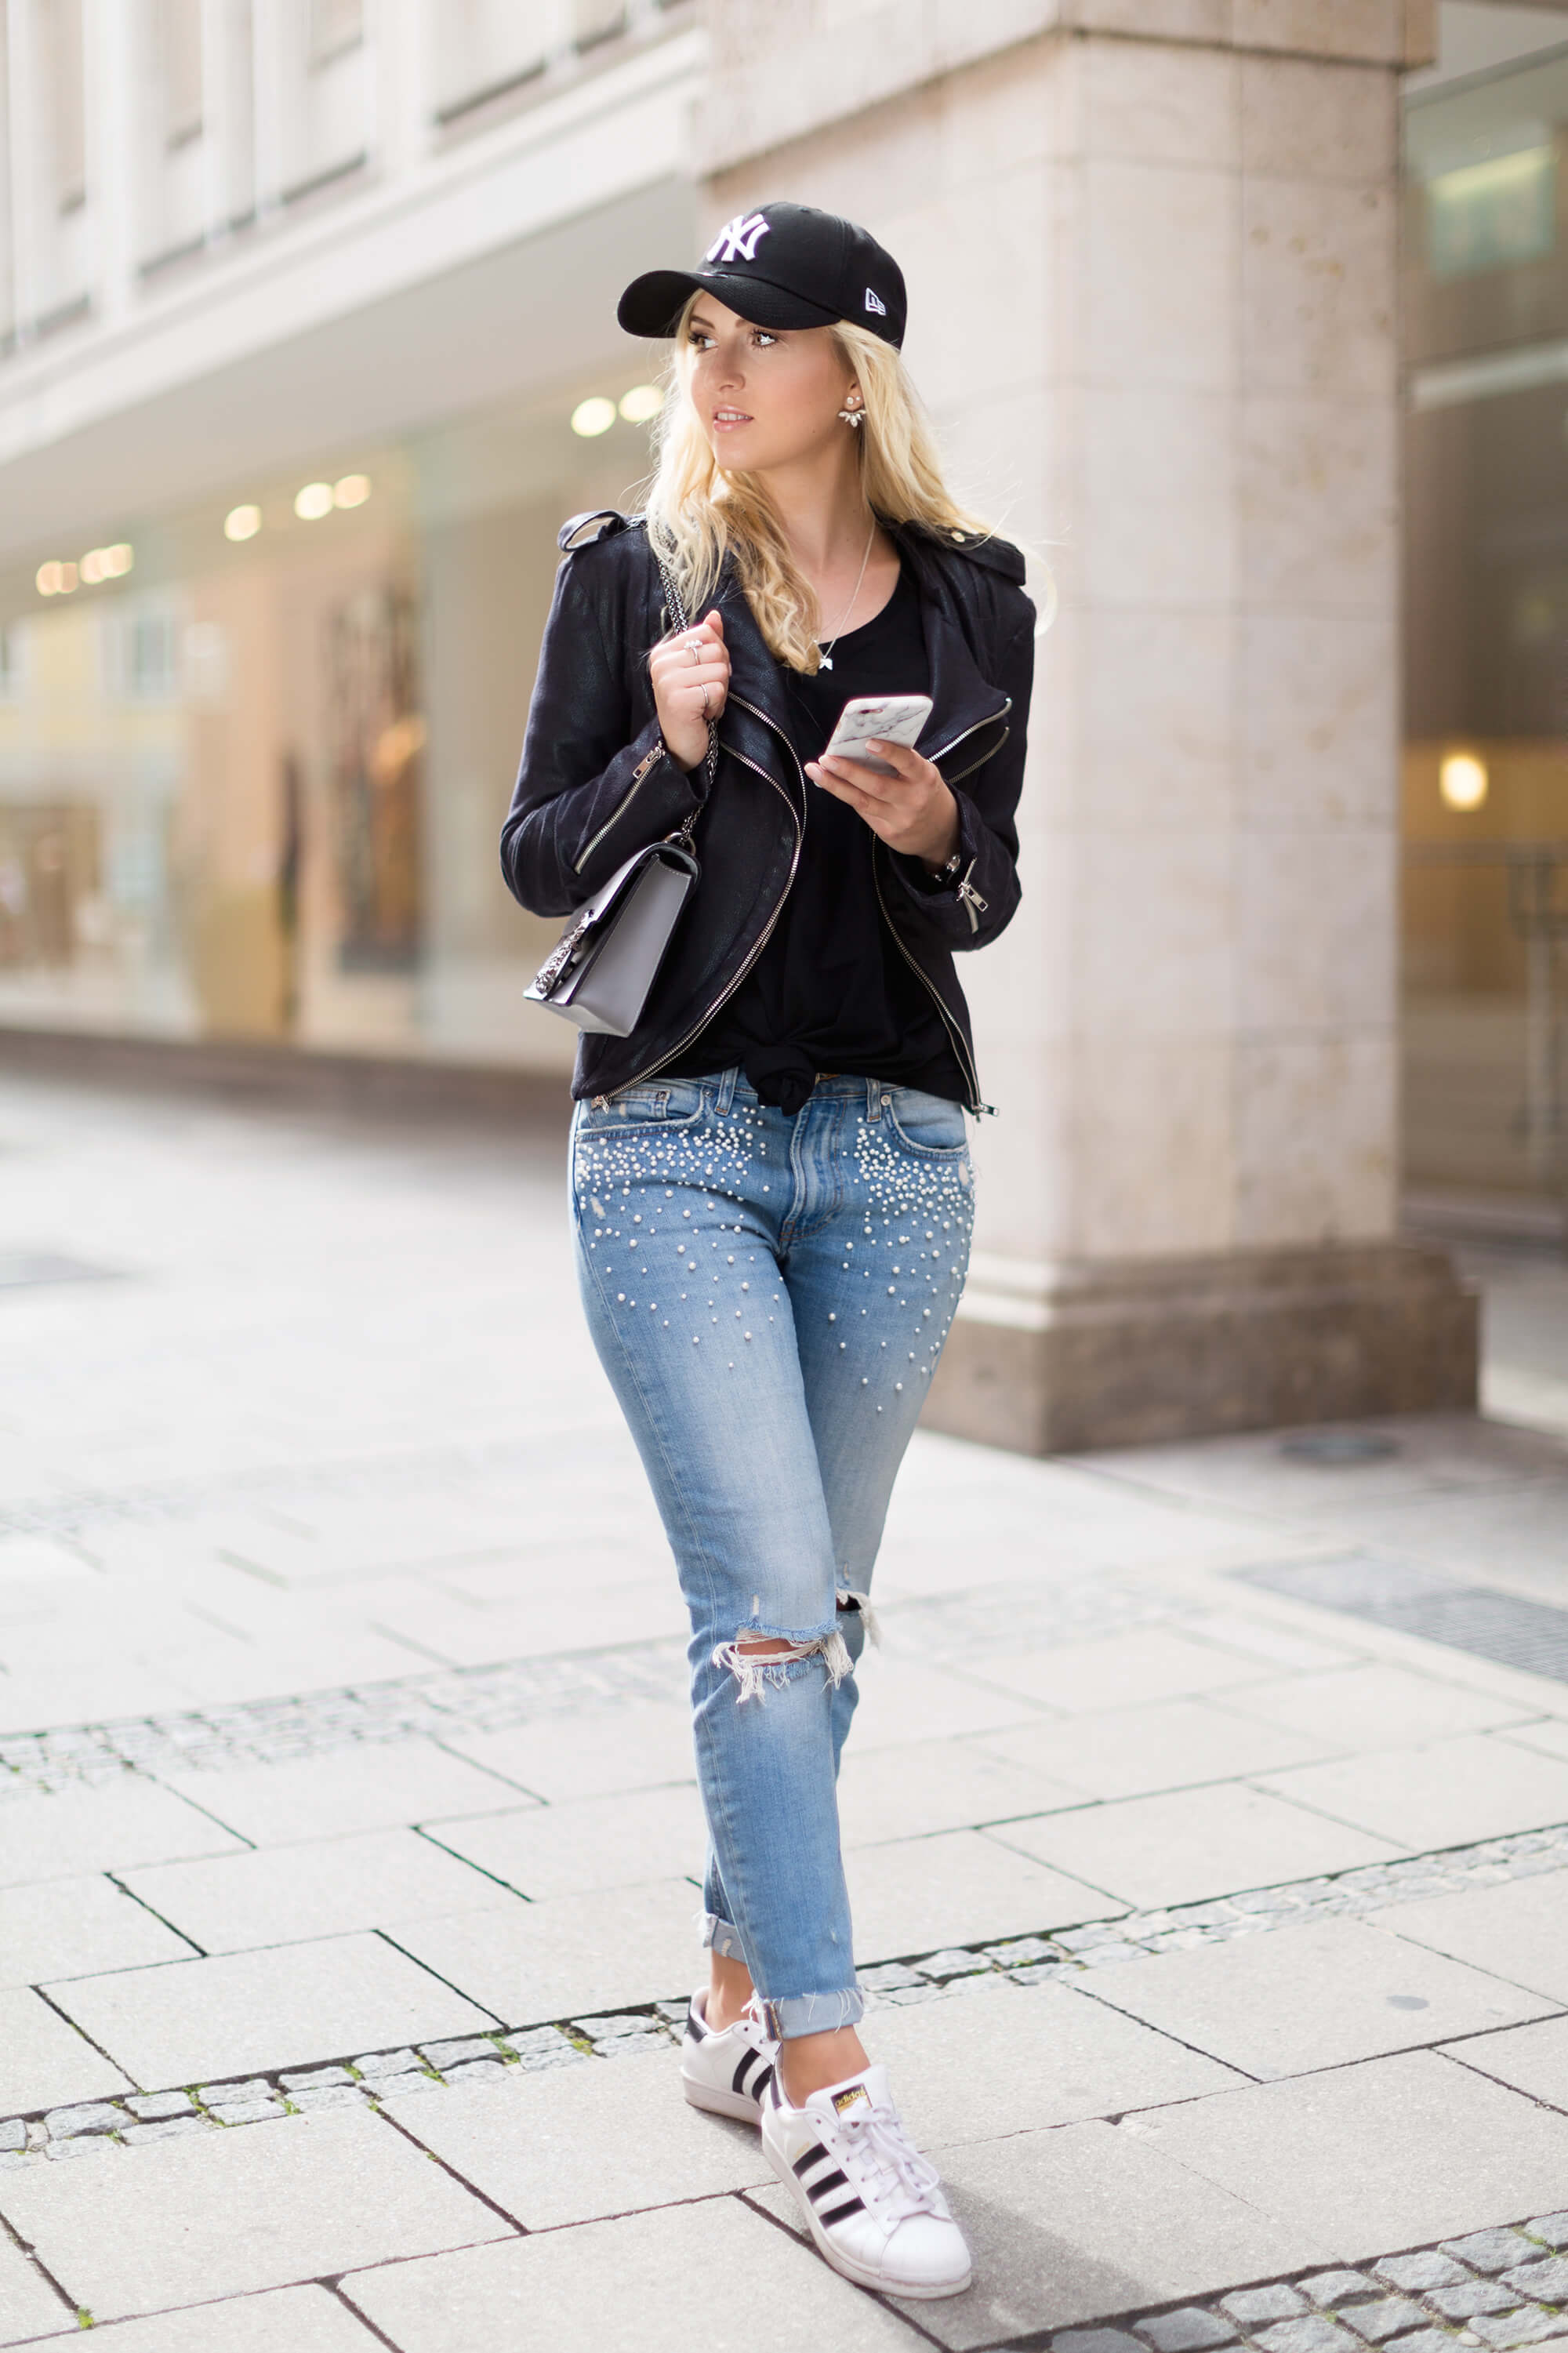 Fashionblog Katefully München Munich Street Style Outfit Cap Lederjacke Perlen Jeans lässig